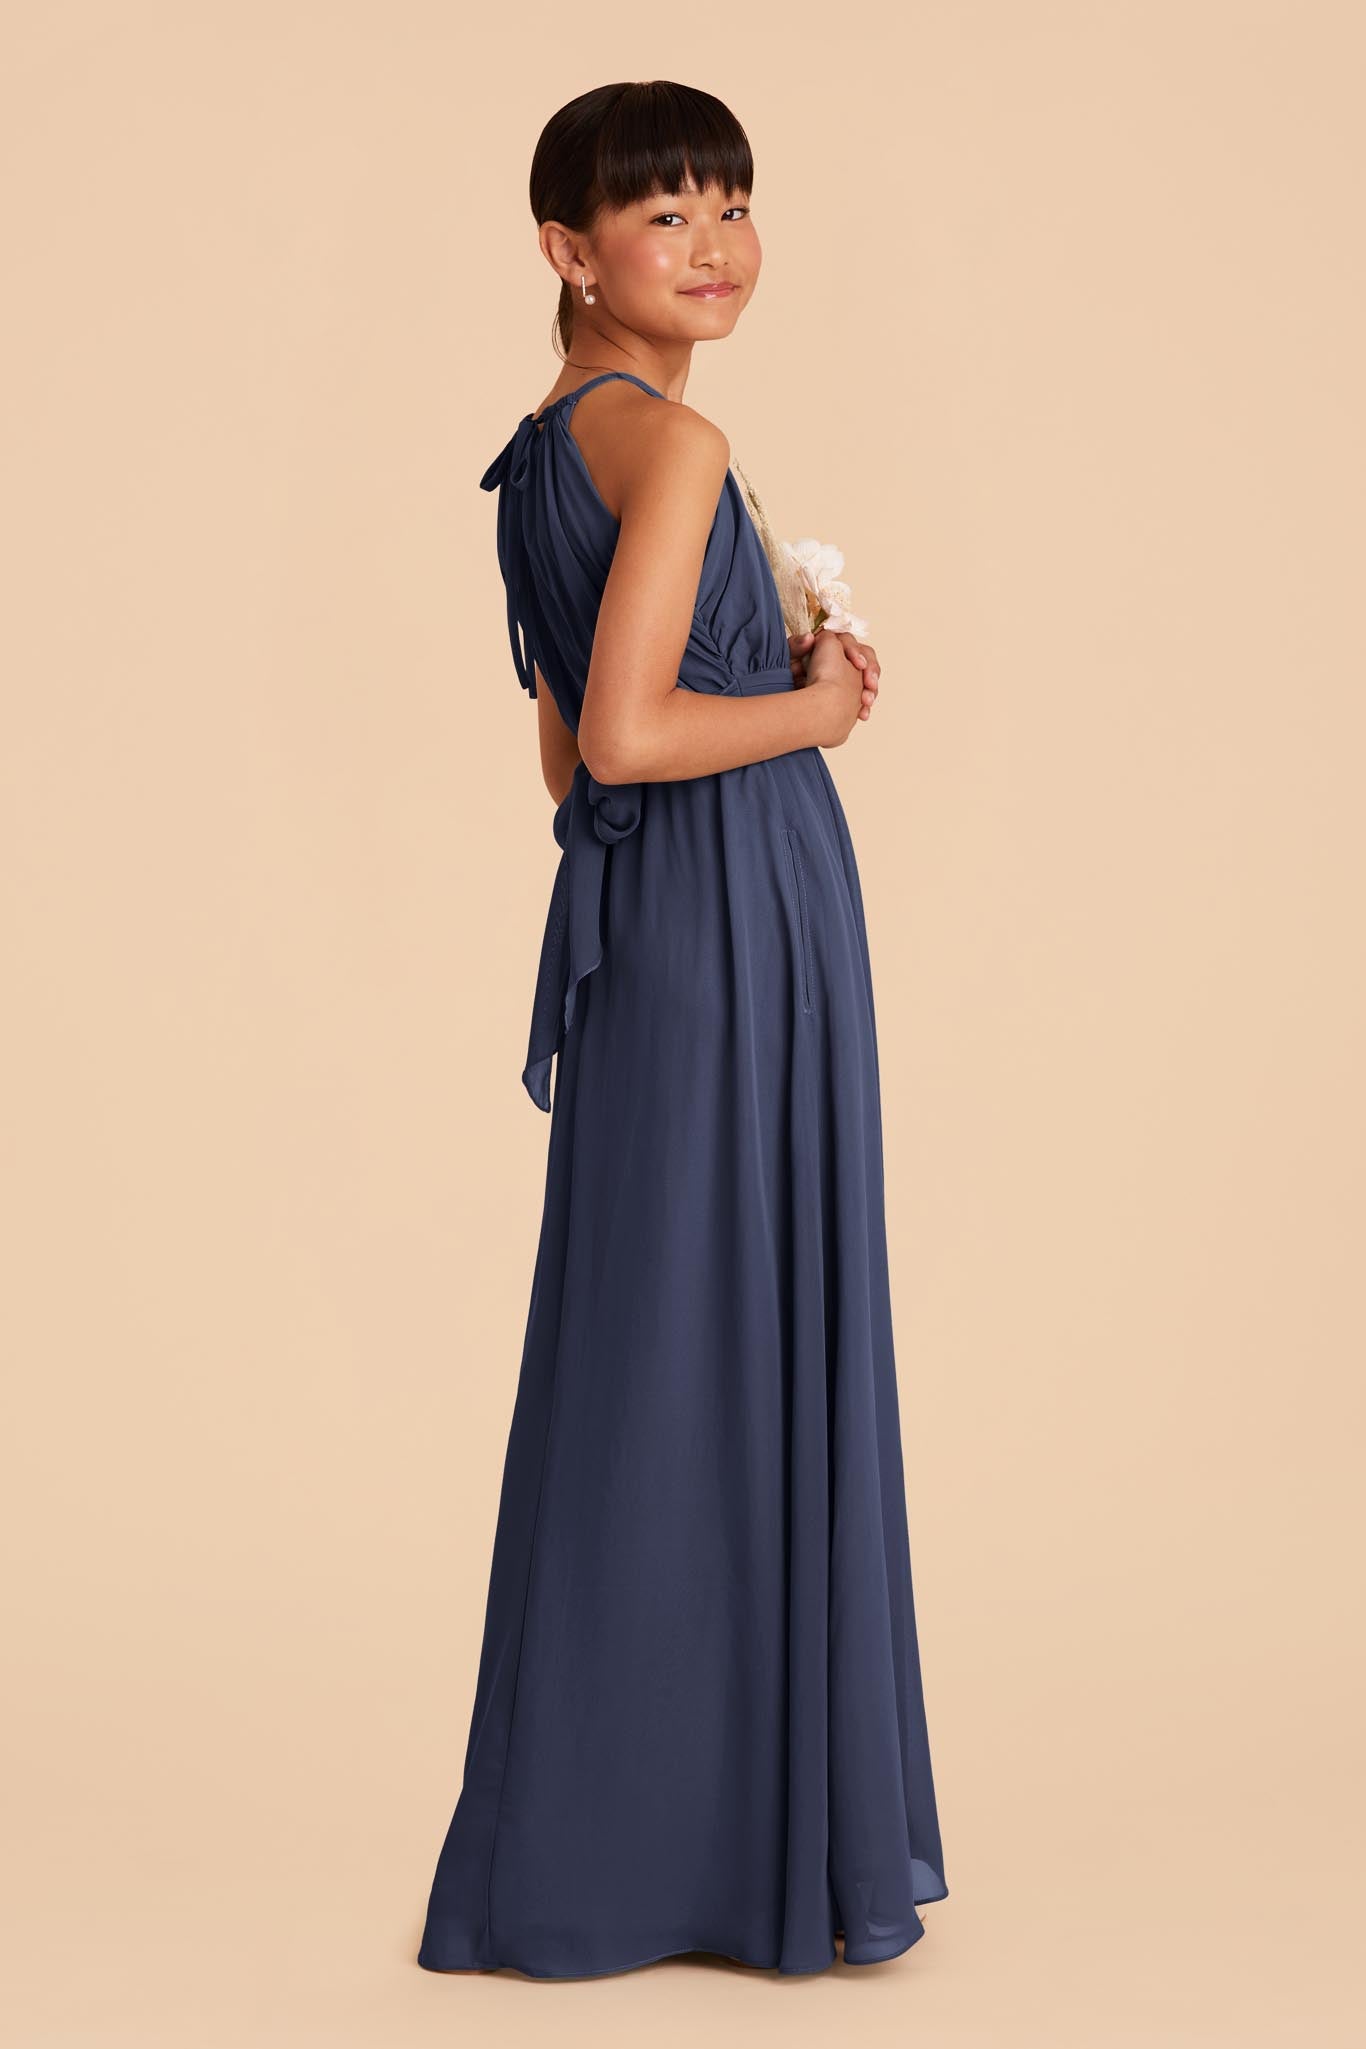 Slate Blue Sienna Junior Dress by Birdy Grey